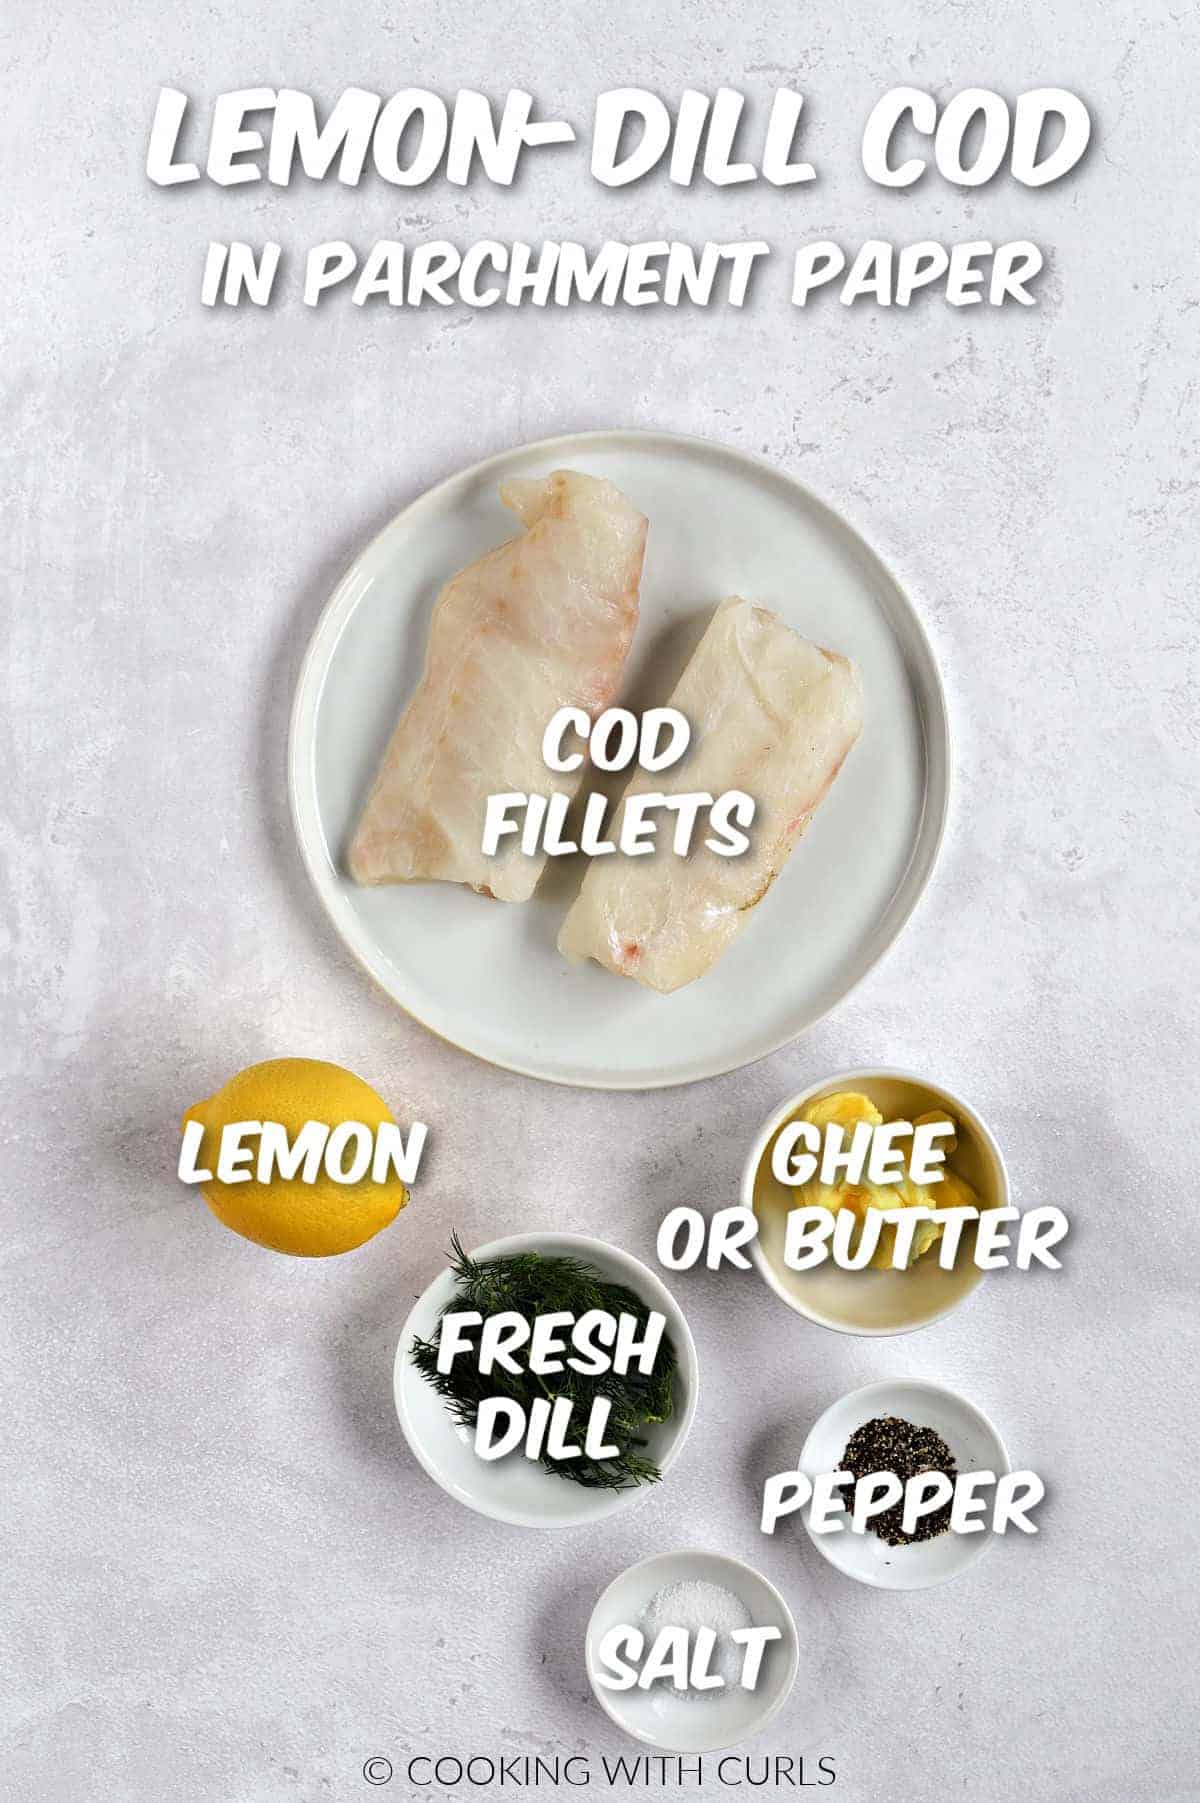 Two cod fillets, a lemon, fresh dill, butter, salt and pepper.